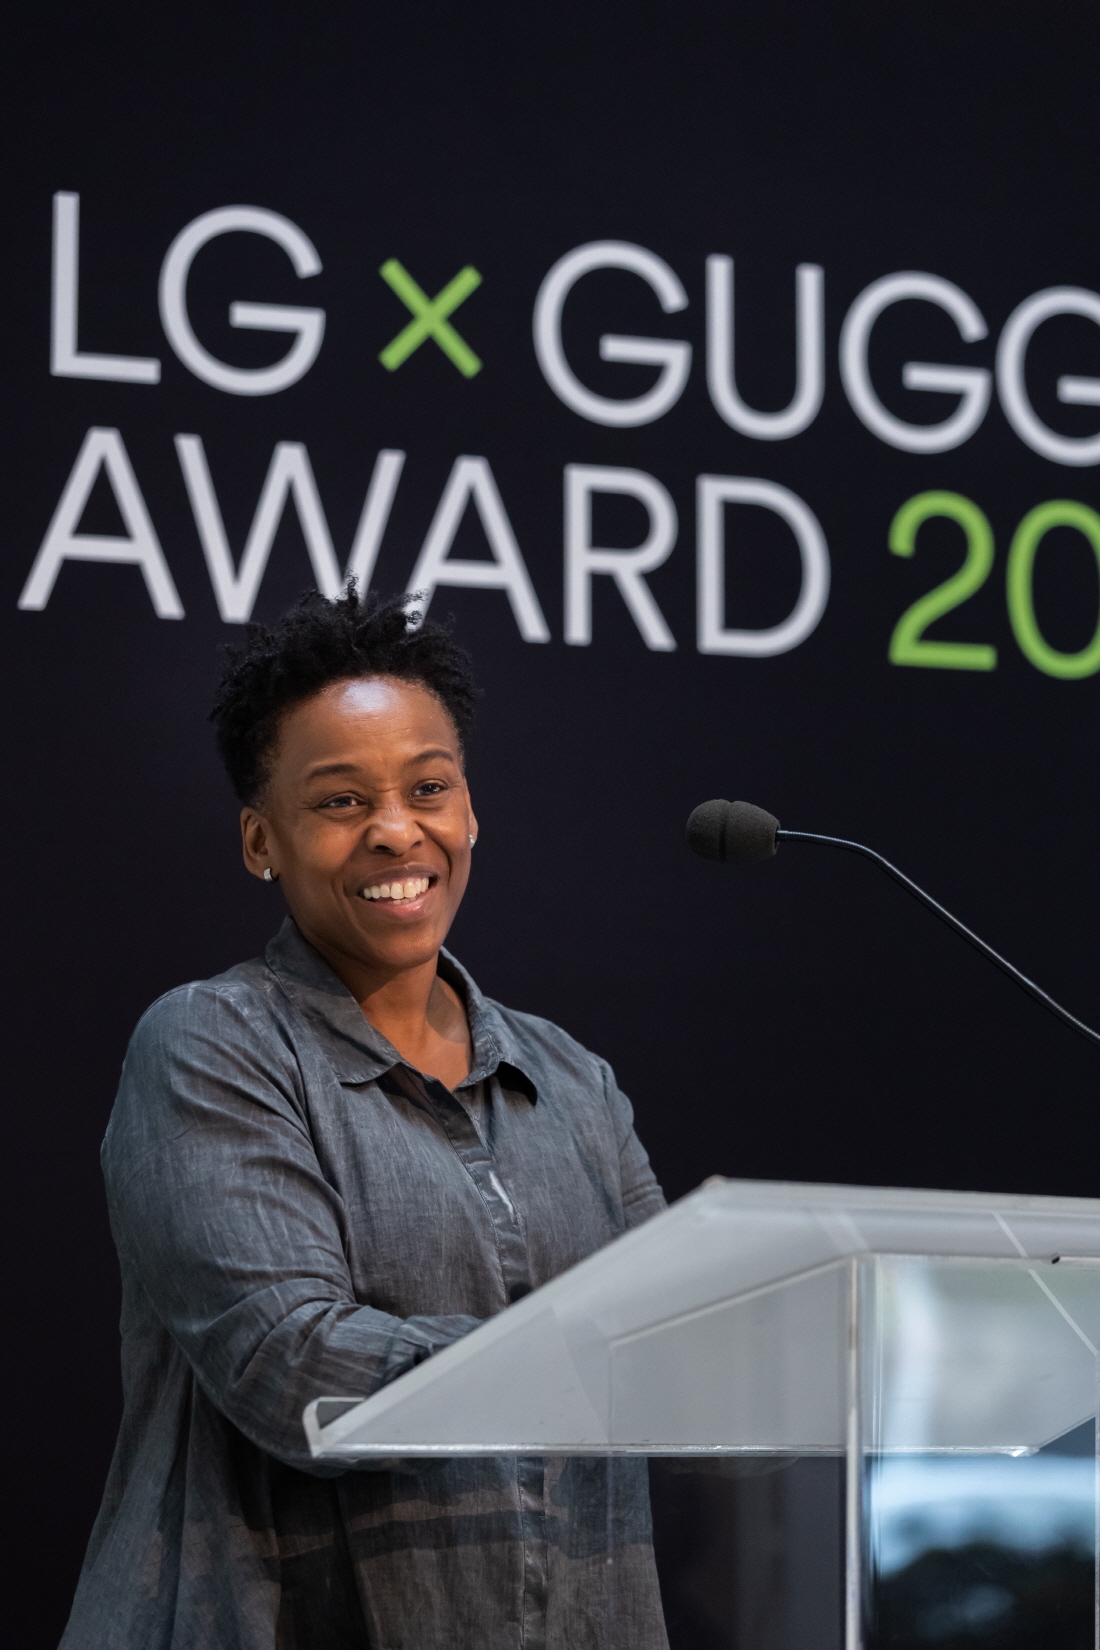 LG 구겐하임 어워드('LG GUGGENHEIM Award'의 첫 수상자인 스테파니 딘킨스(Stephanie Dinkins)가 현지시간 19일 뉴욕 구겐하임 뮤지엄에서 수상소감을 발표하고 있다. 사진 제공=LG